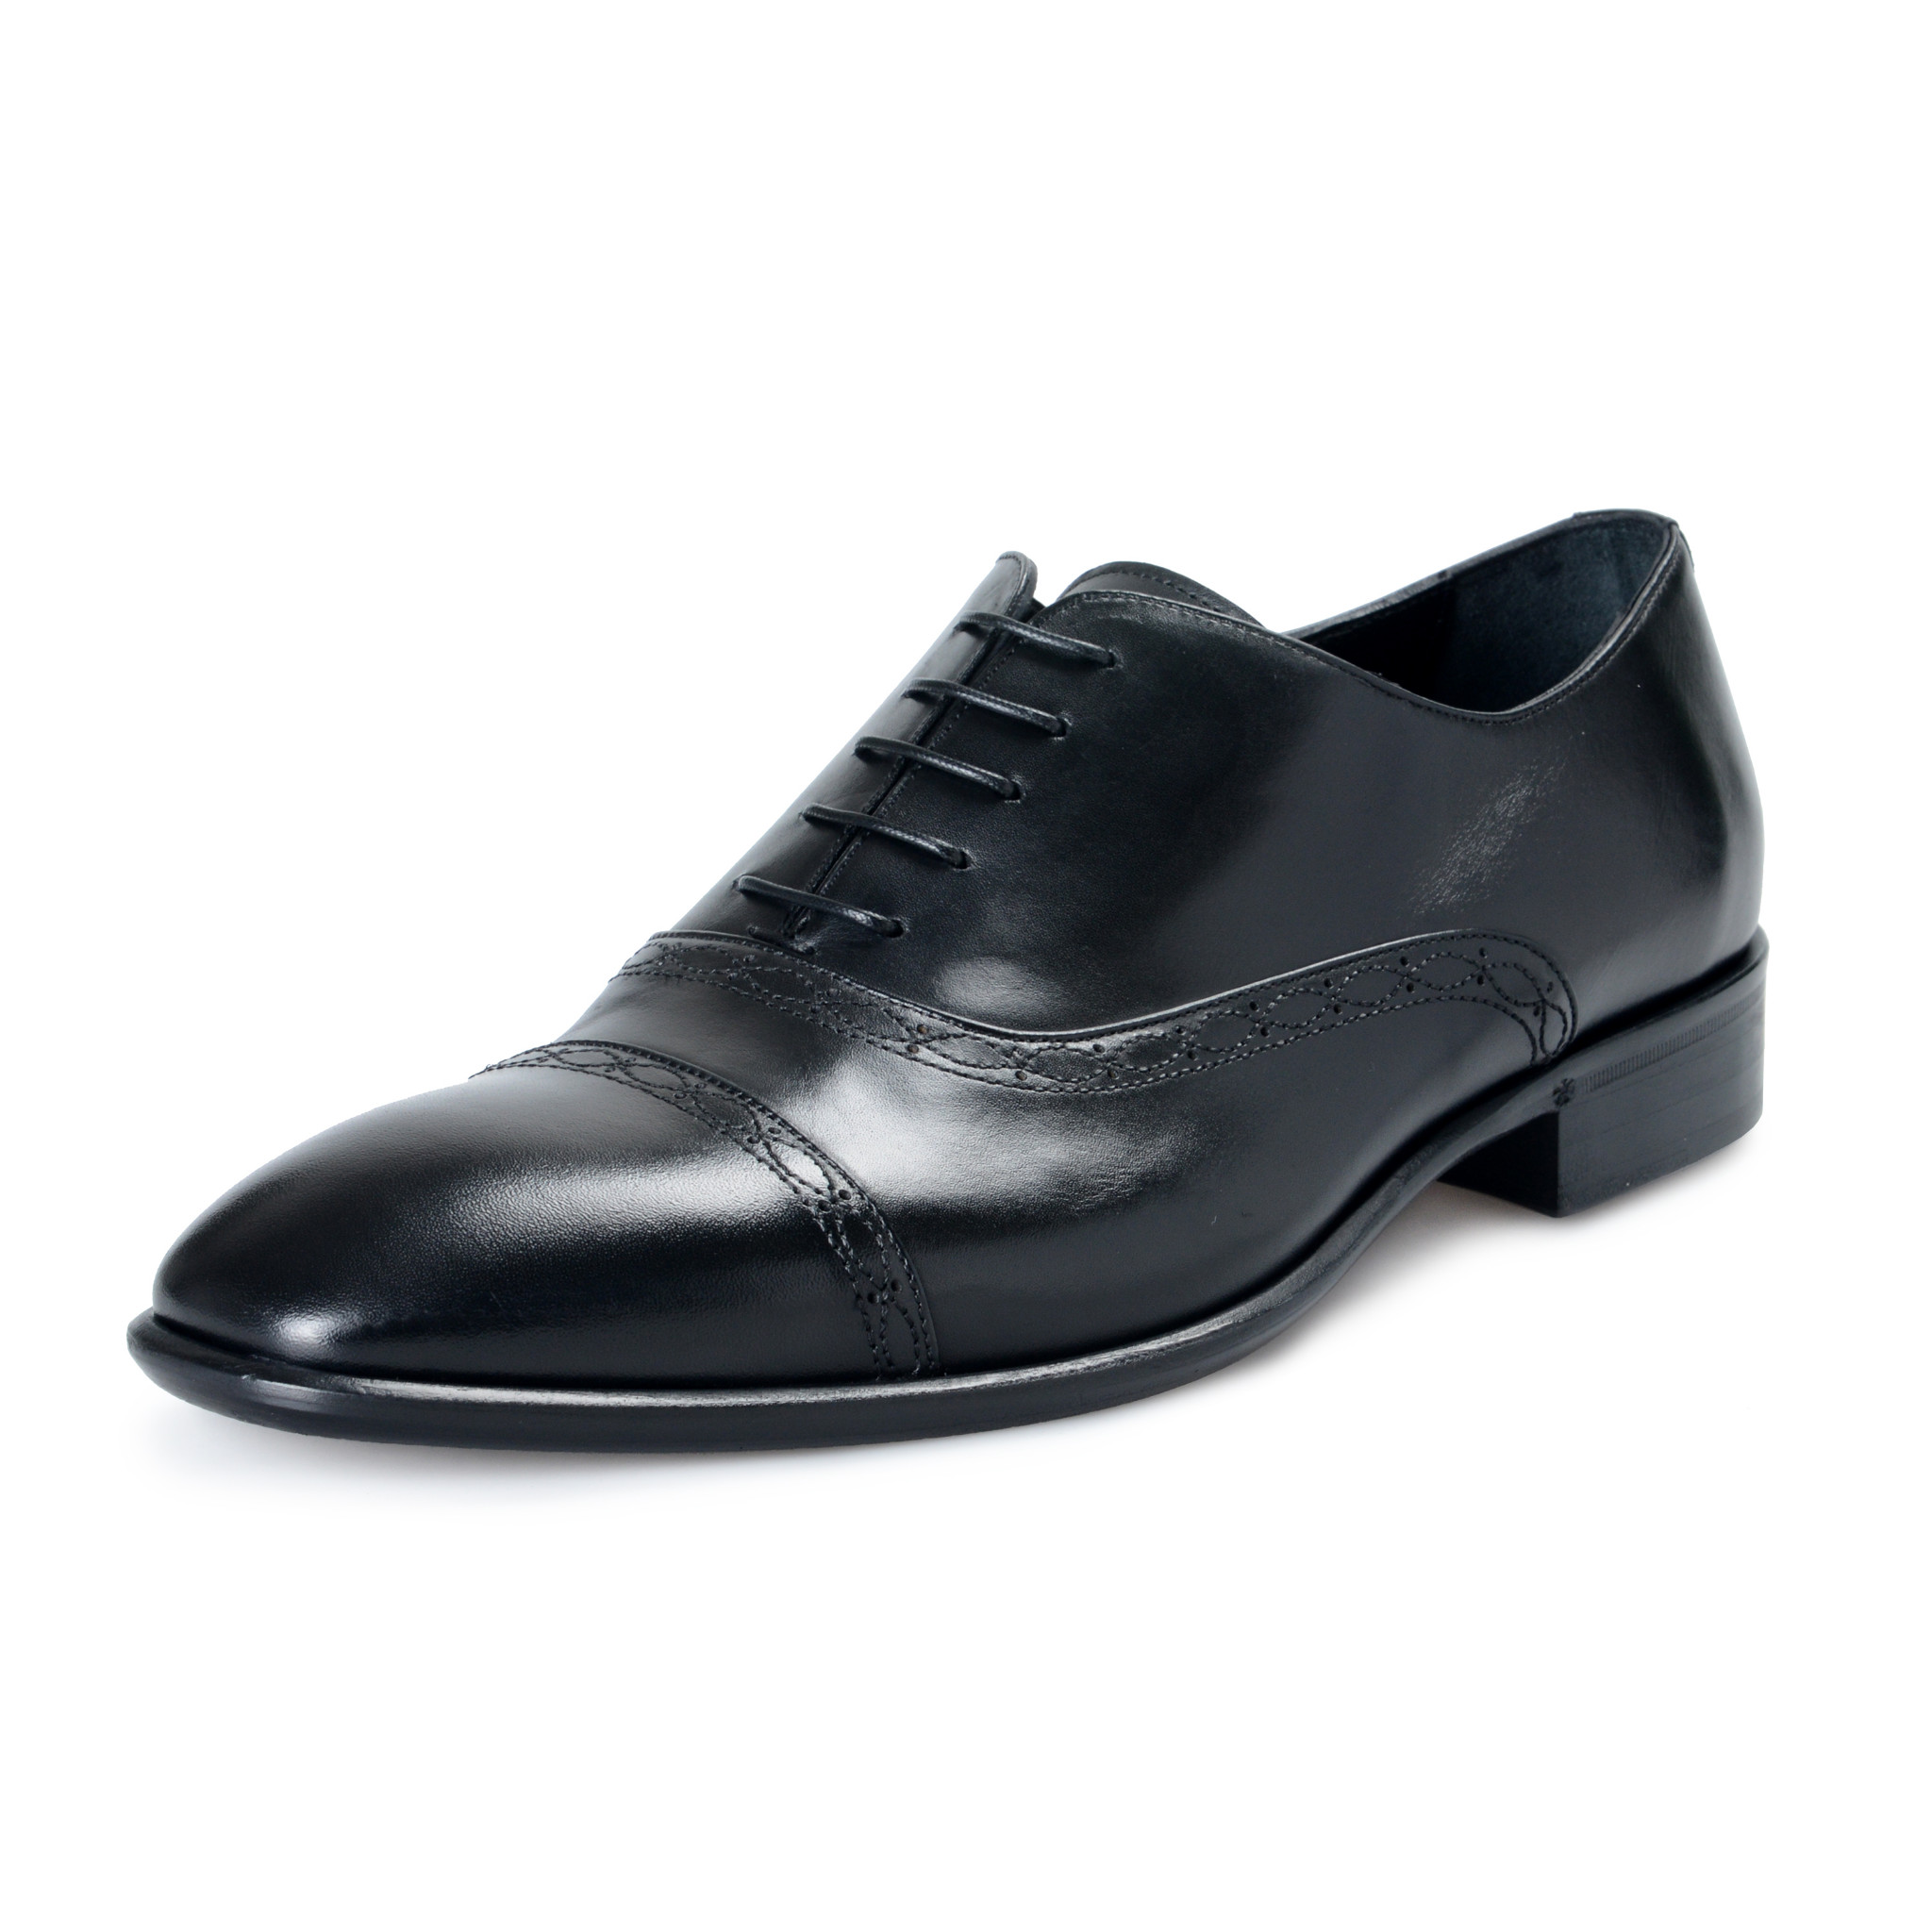 Roberto Cavalli Men's Black Leather Lace Up Oxfords Shoes | eBay